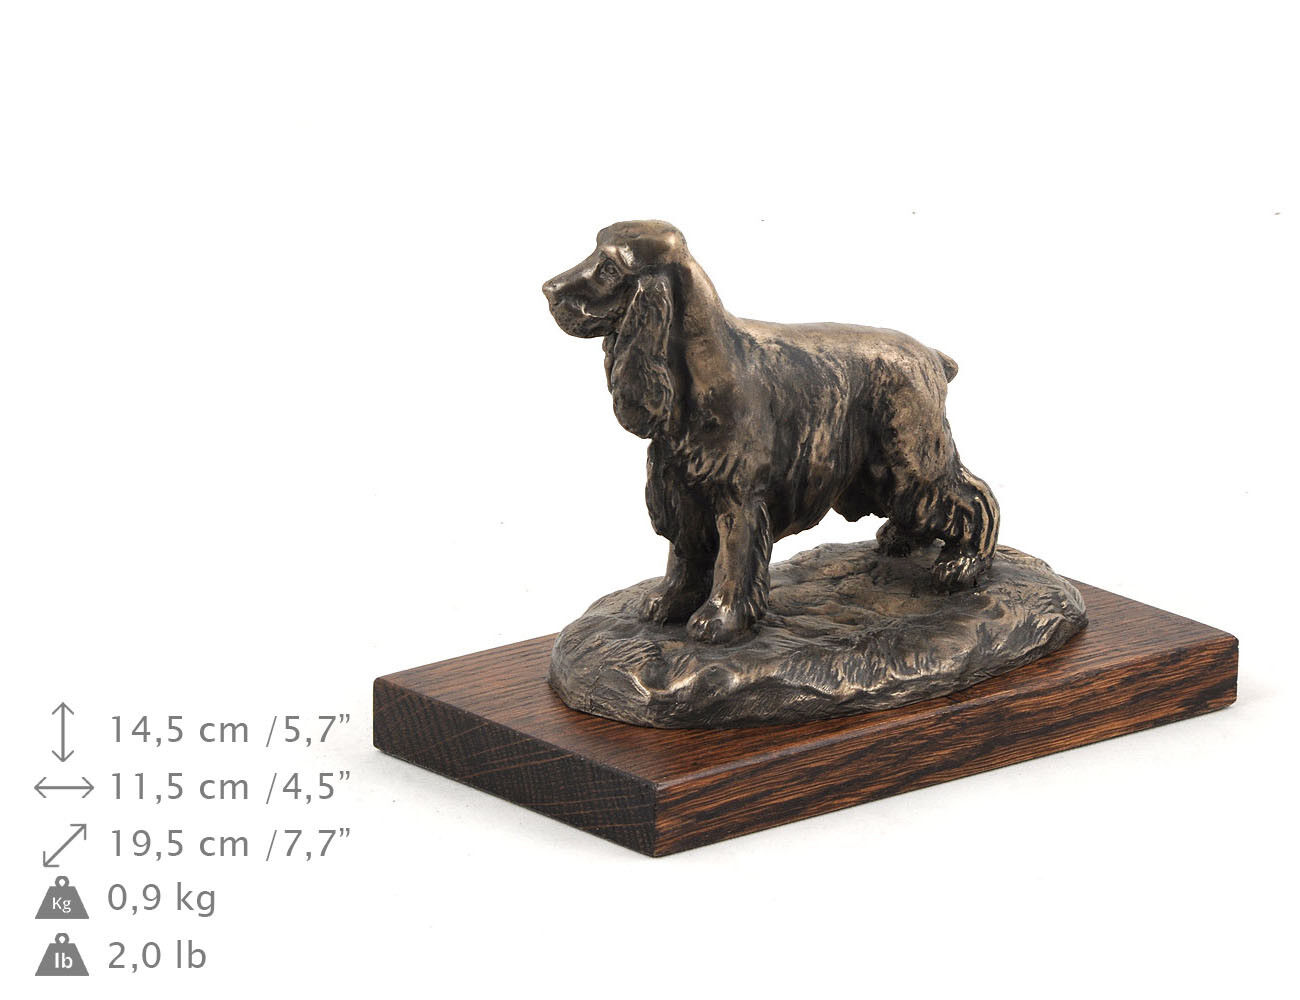 English Cocker Spaniel,dog bust/statue on wooden base,ArtDog Limited Edition,USA